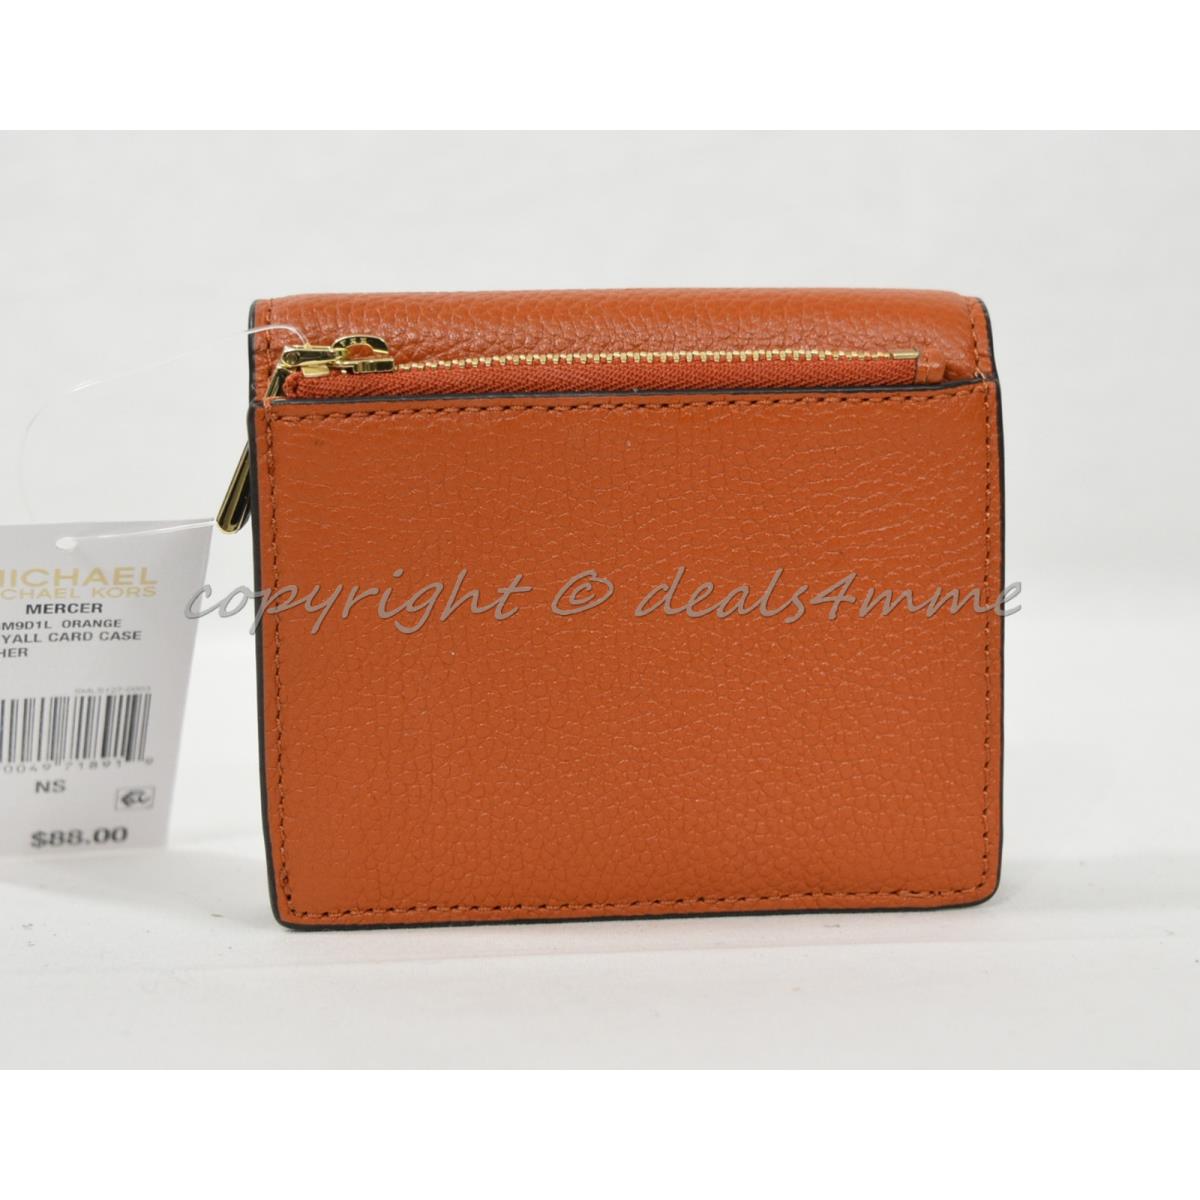 Michael Kors Mercer Leather Carryall Card Case in Orange Pebbled Leather